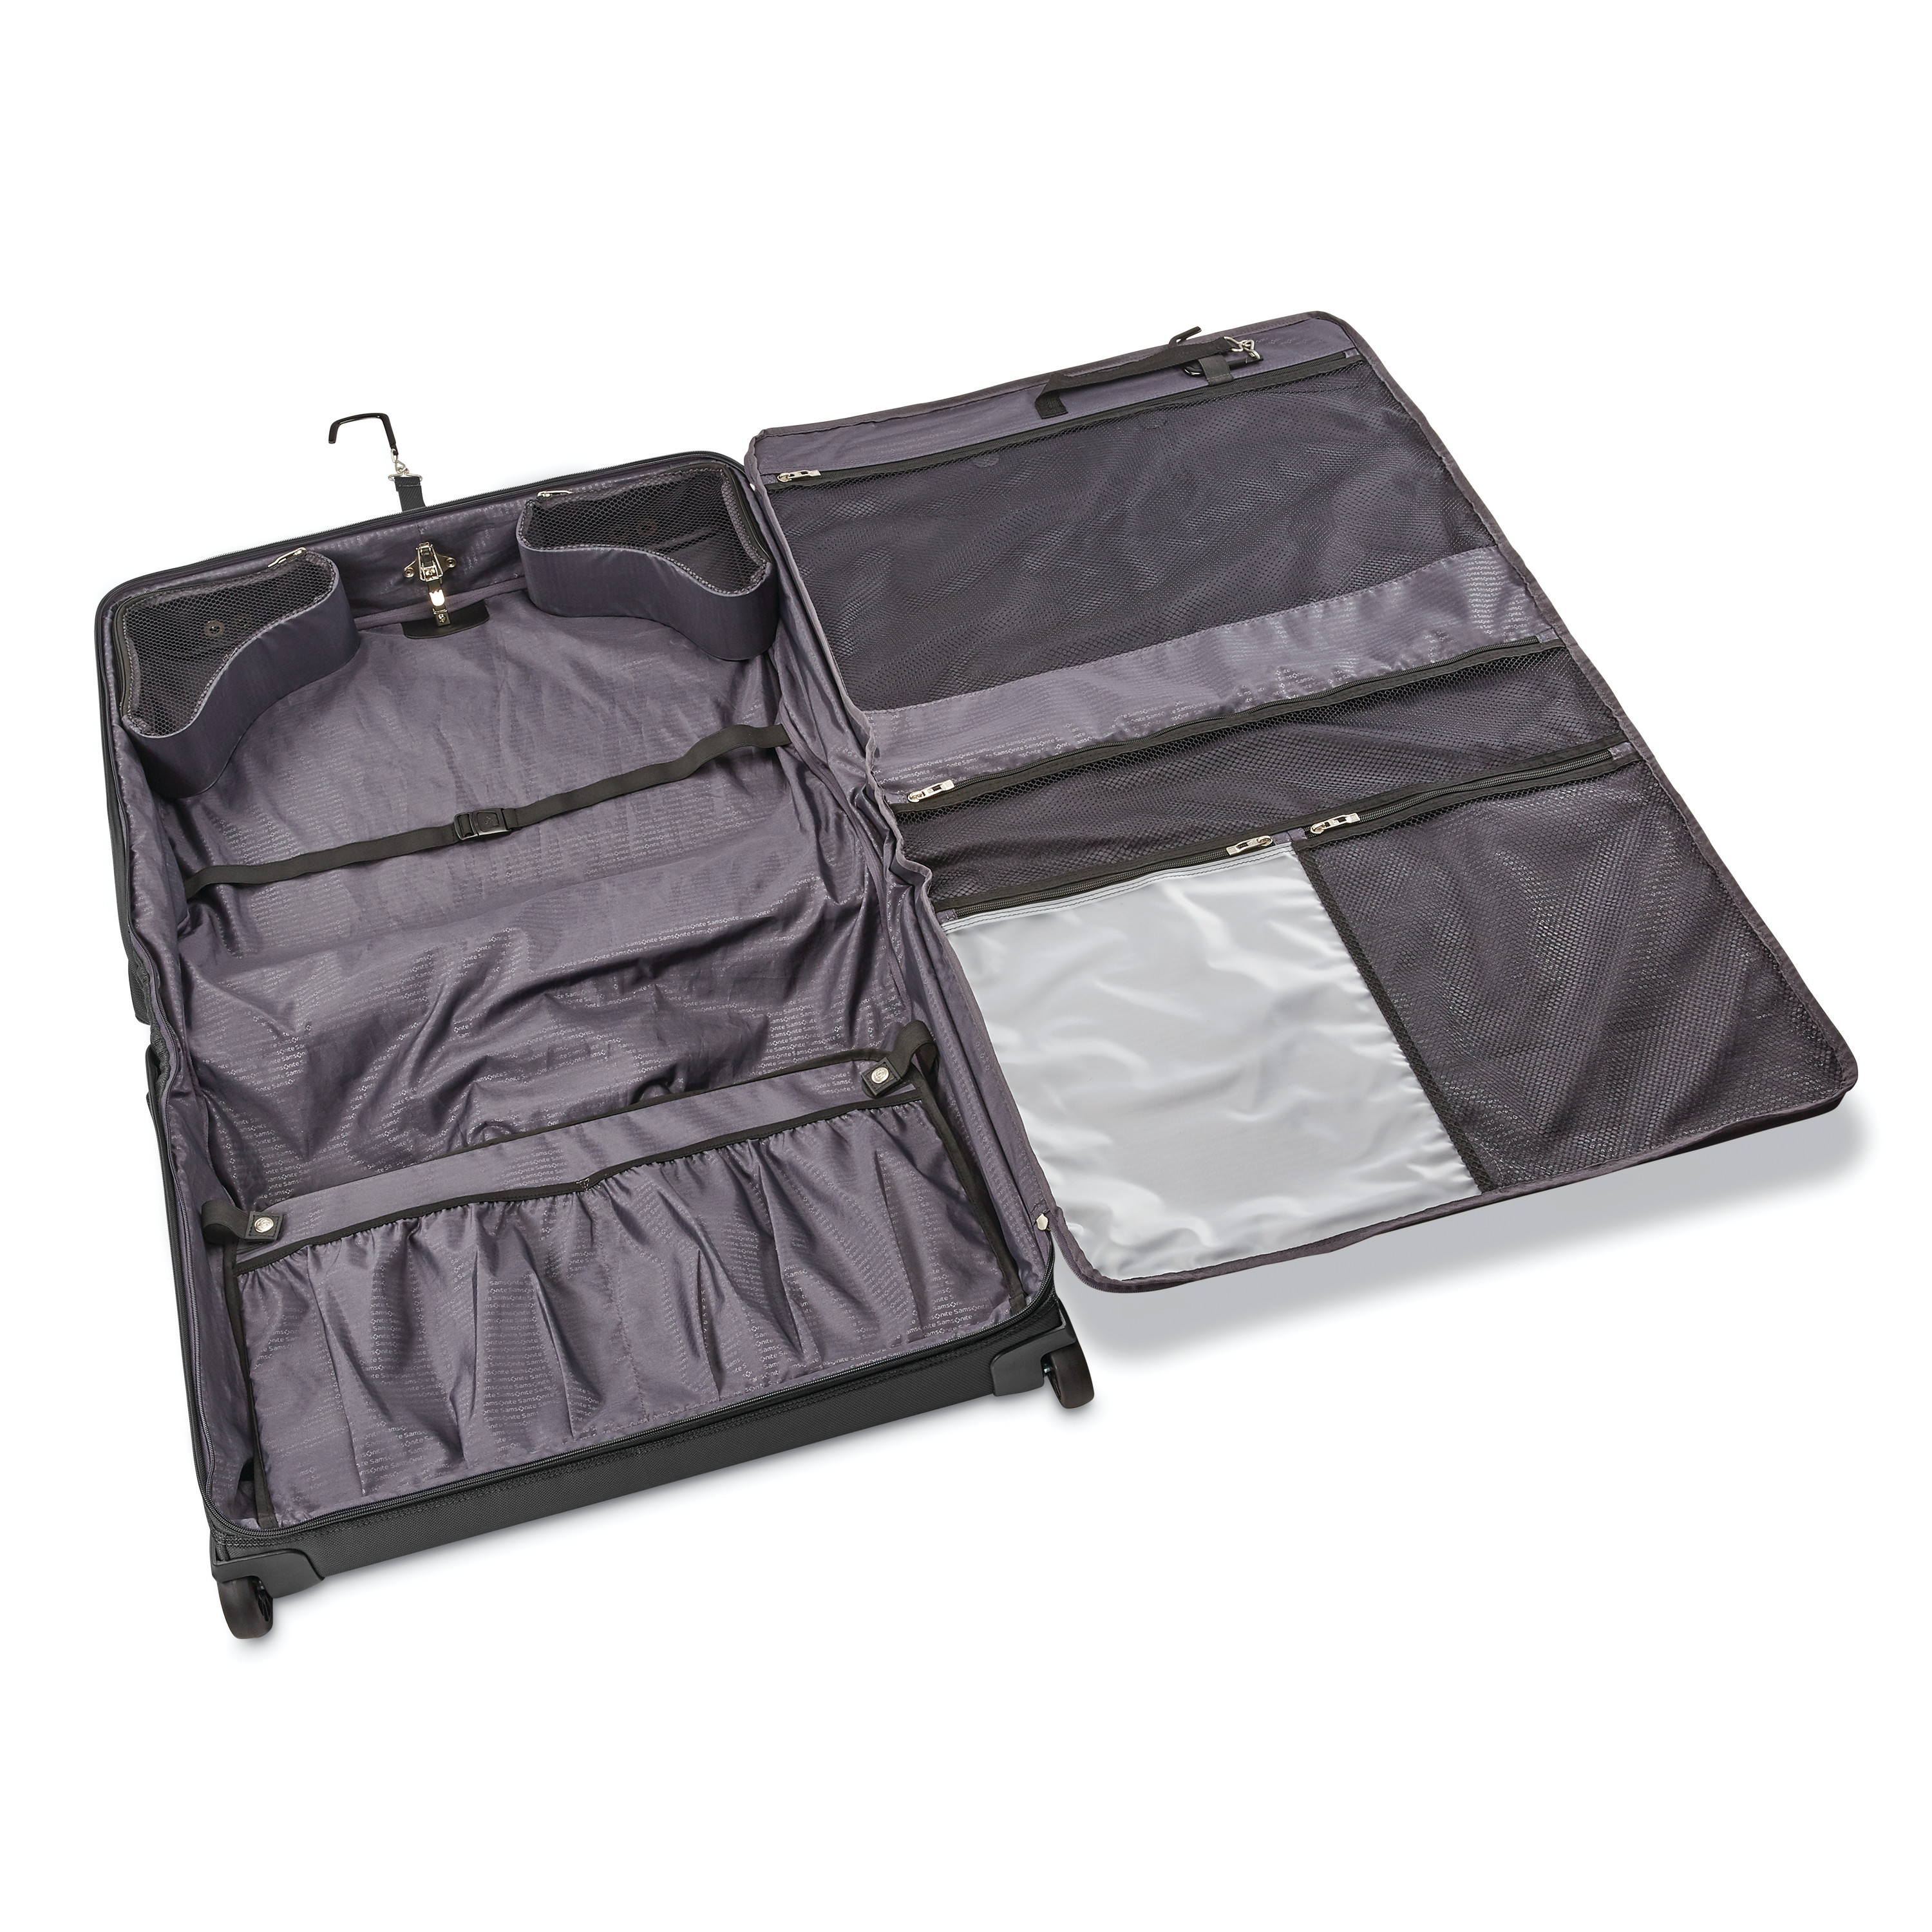 Samsonite Lift2 Co Wheeled Garment Bag SKU:#8336045 